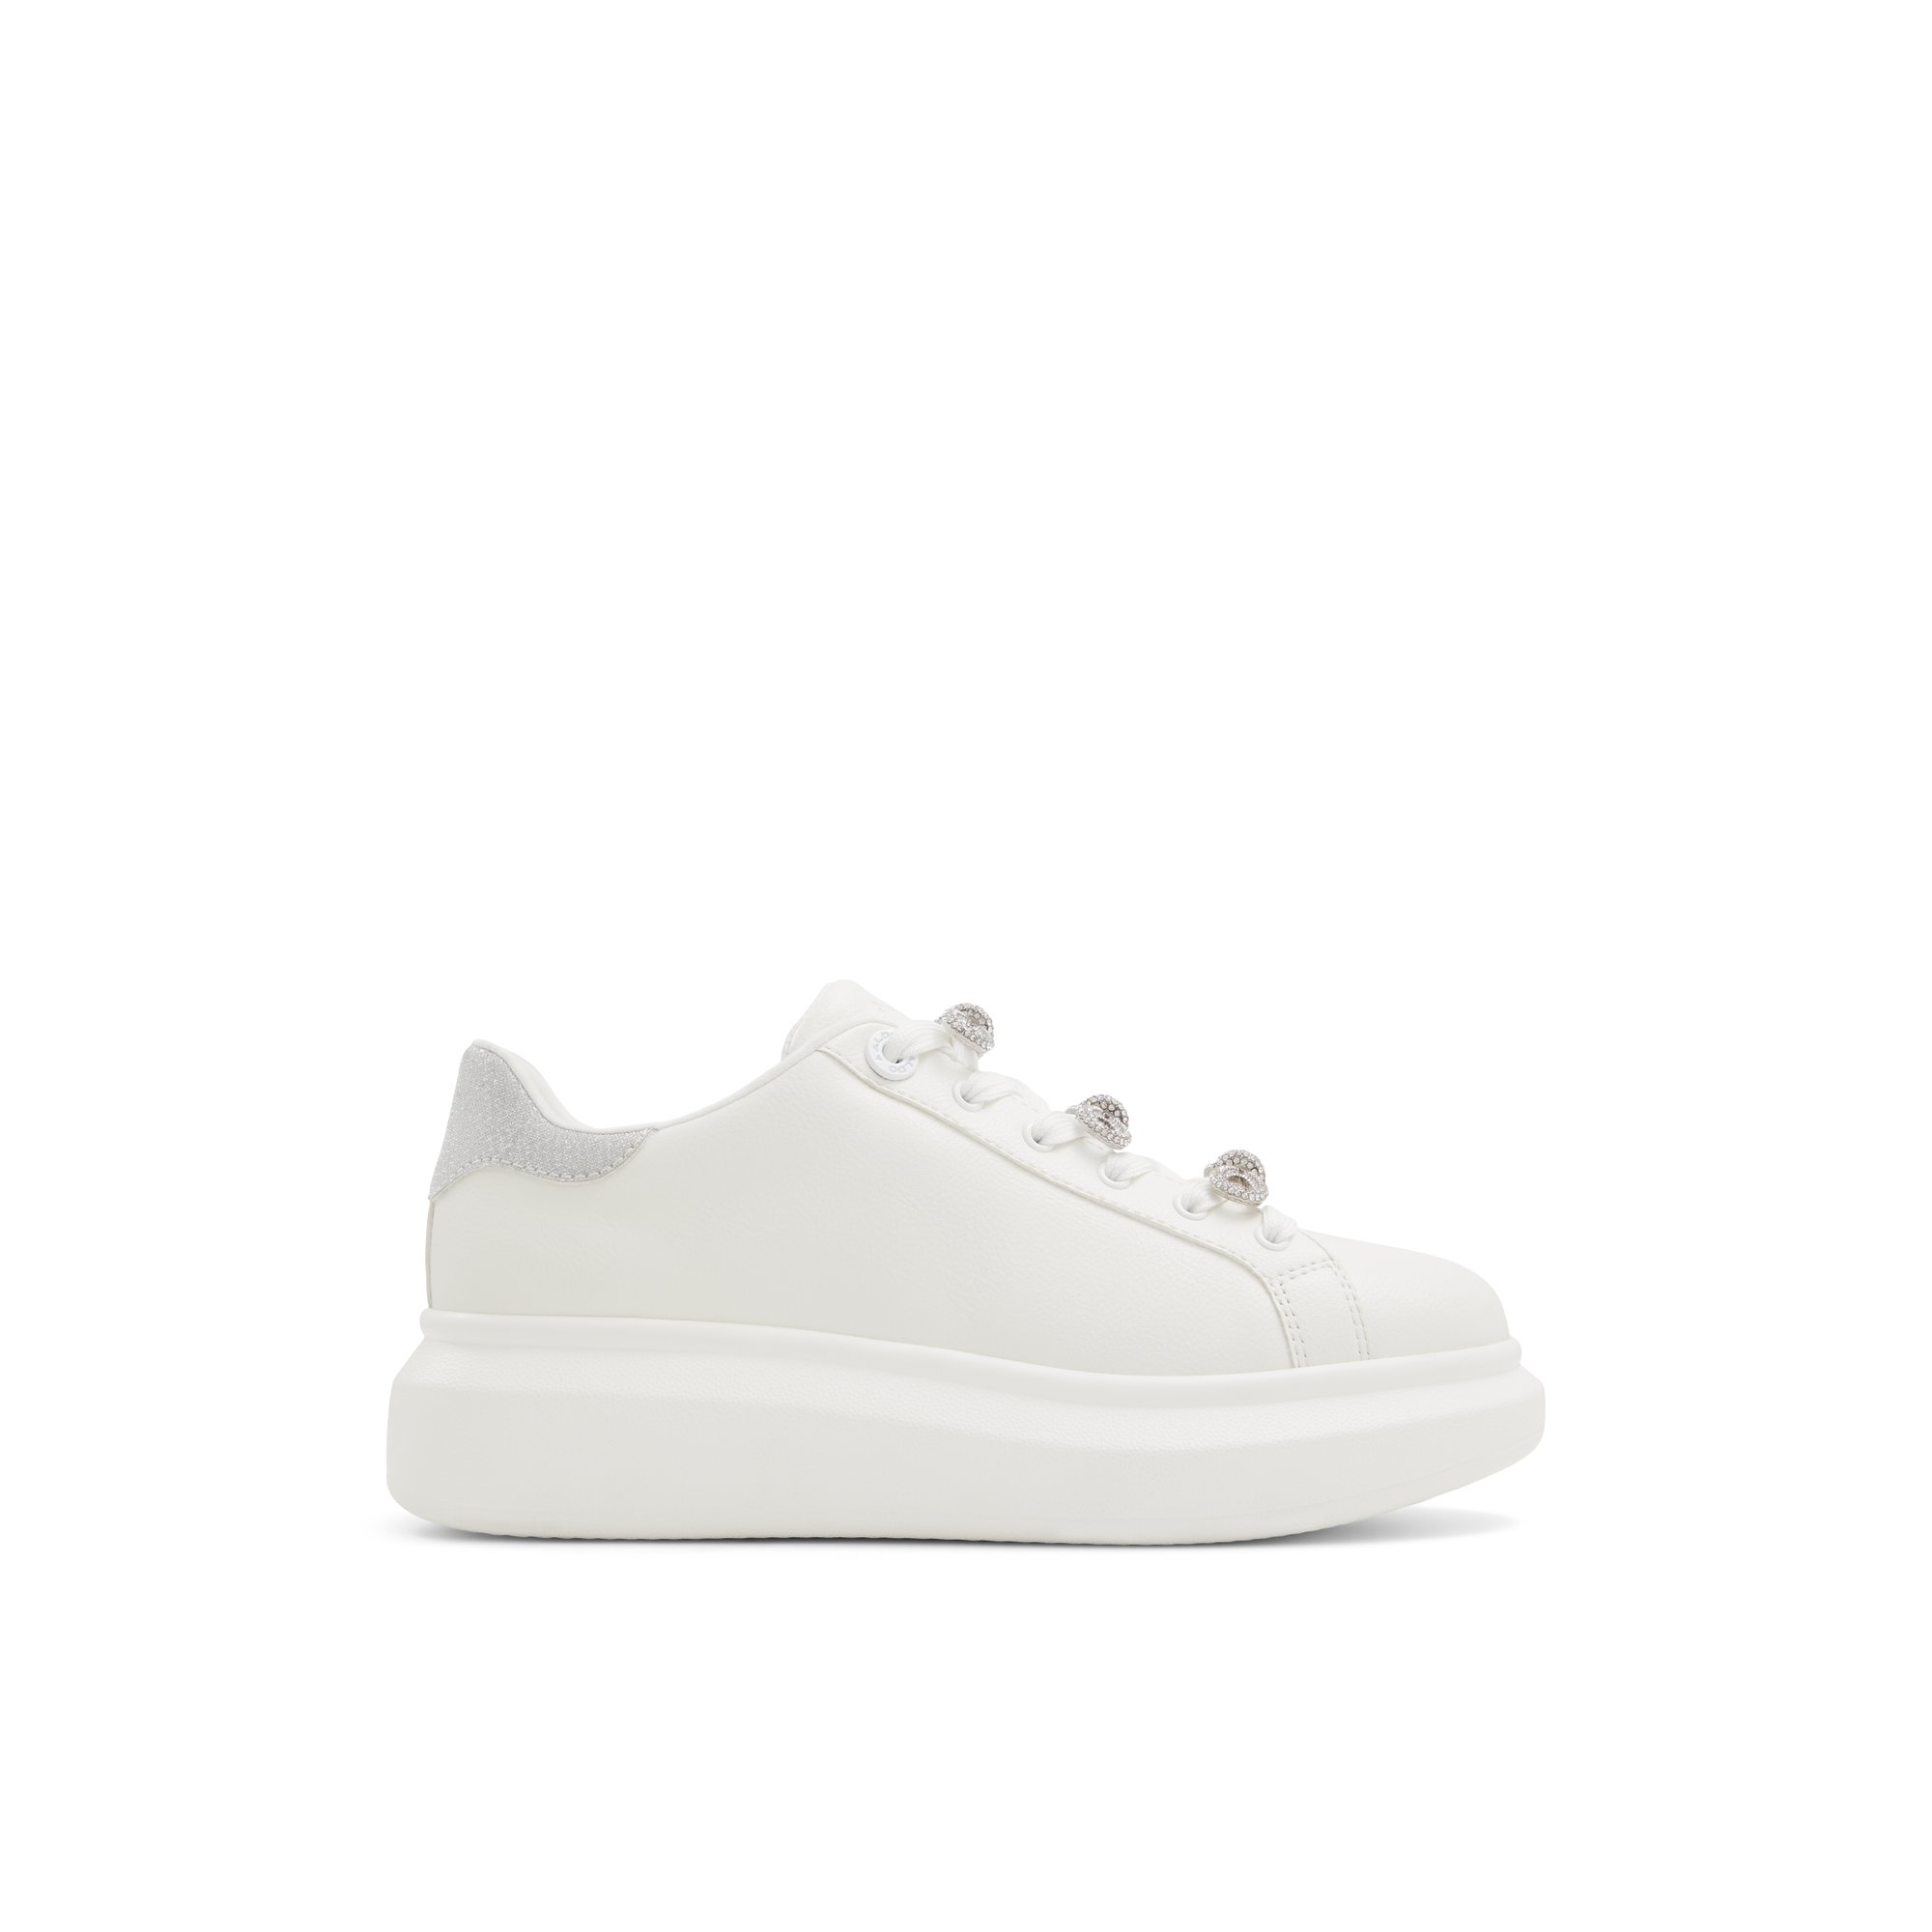 ALDO Merrick - Women's Low Top Sneaker Sneakers - White